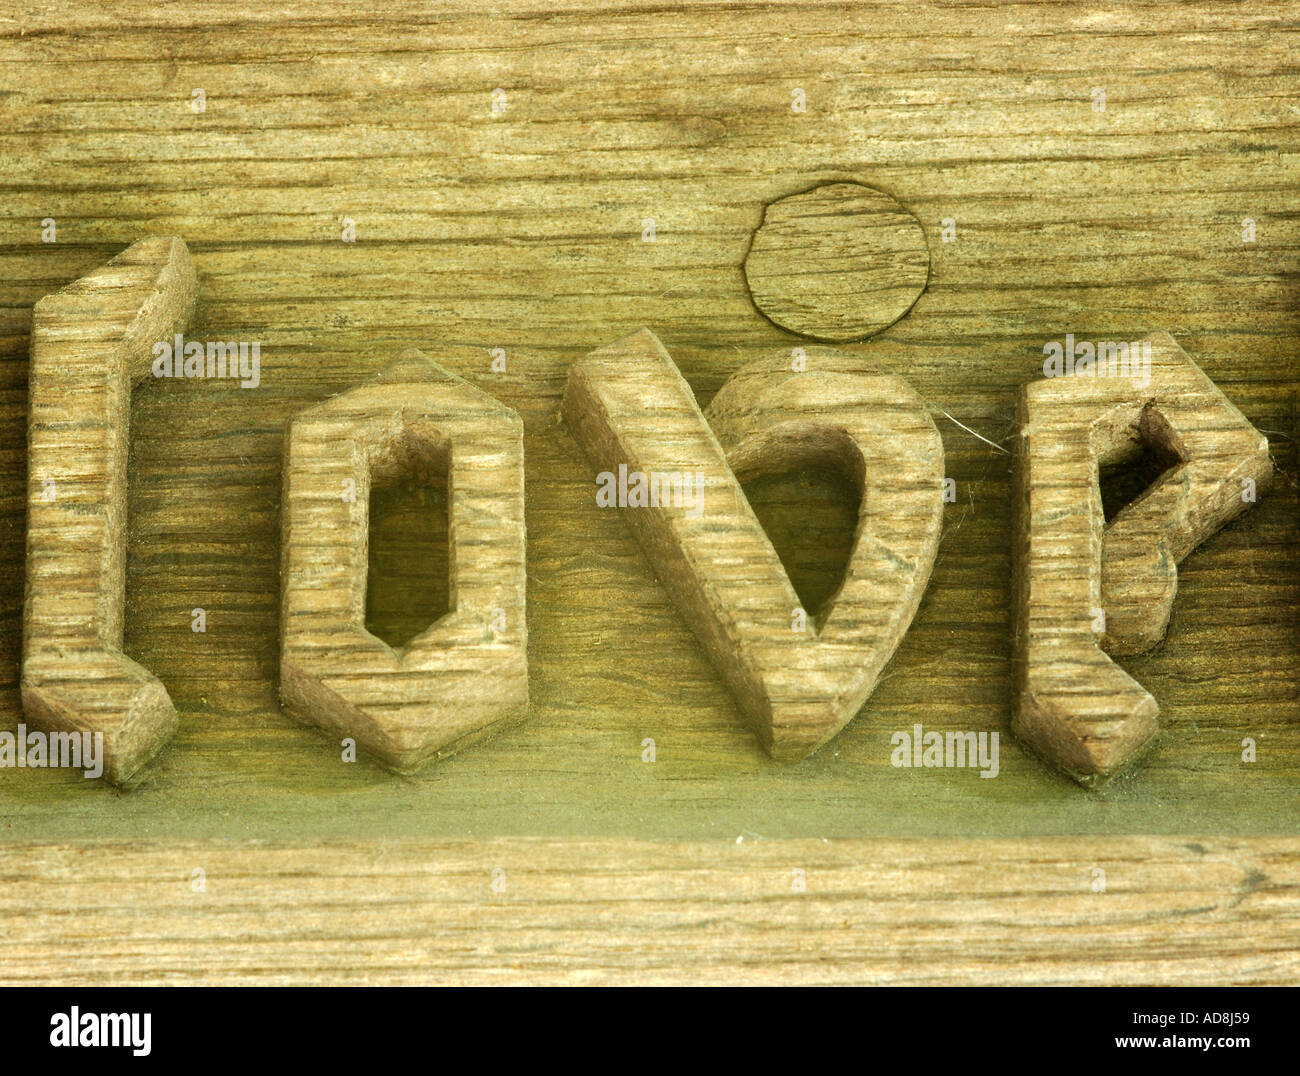 Palabra Amor de madera tallada en una iglesia porche Foto de stock